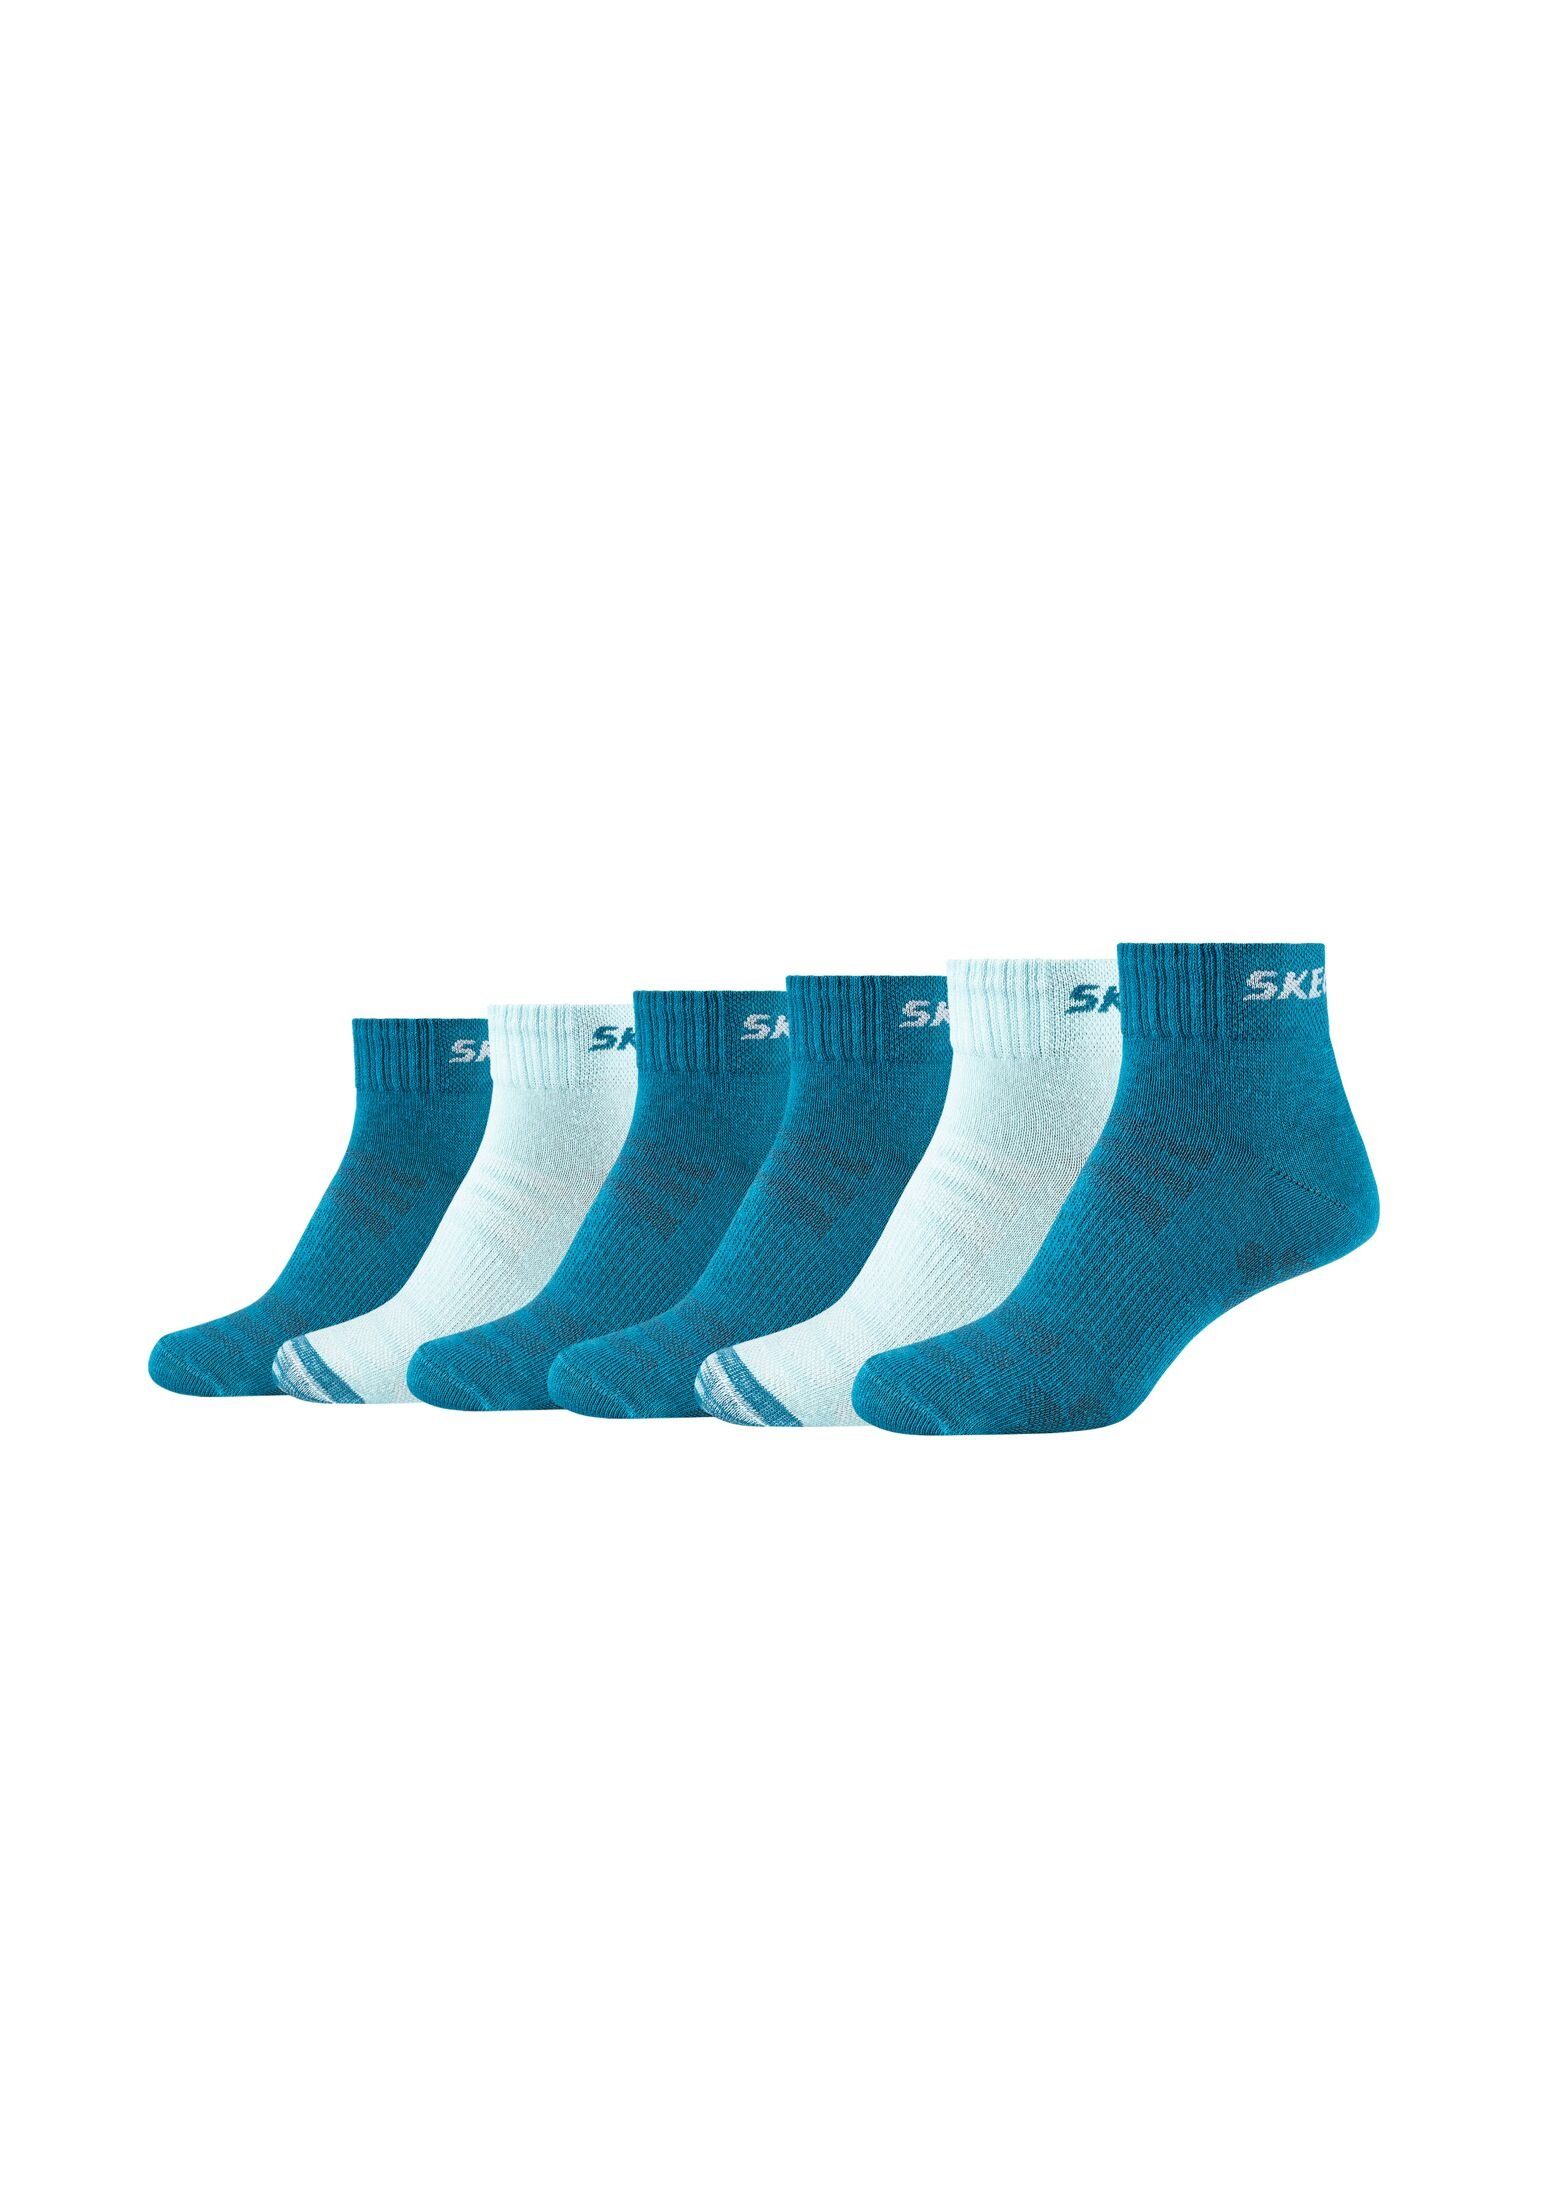 mit im 6er Kurzsocken Komfort-Bündchen Pack, Kurzsocken Skechers Socken 6er-Pack praktischen